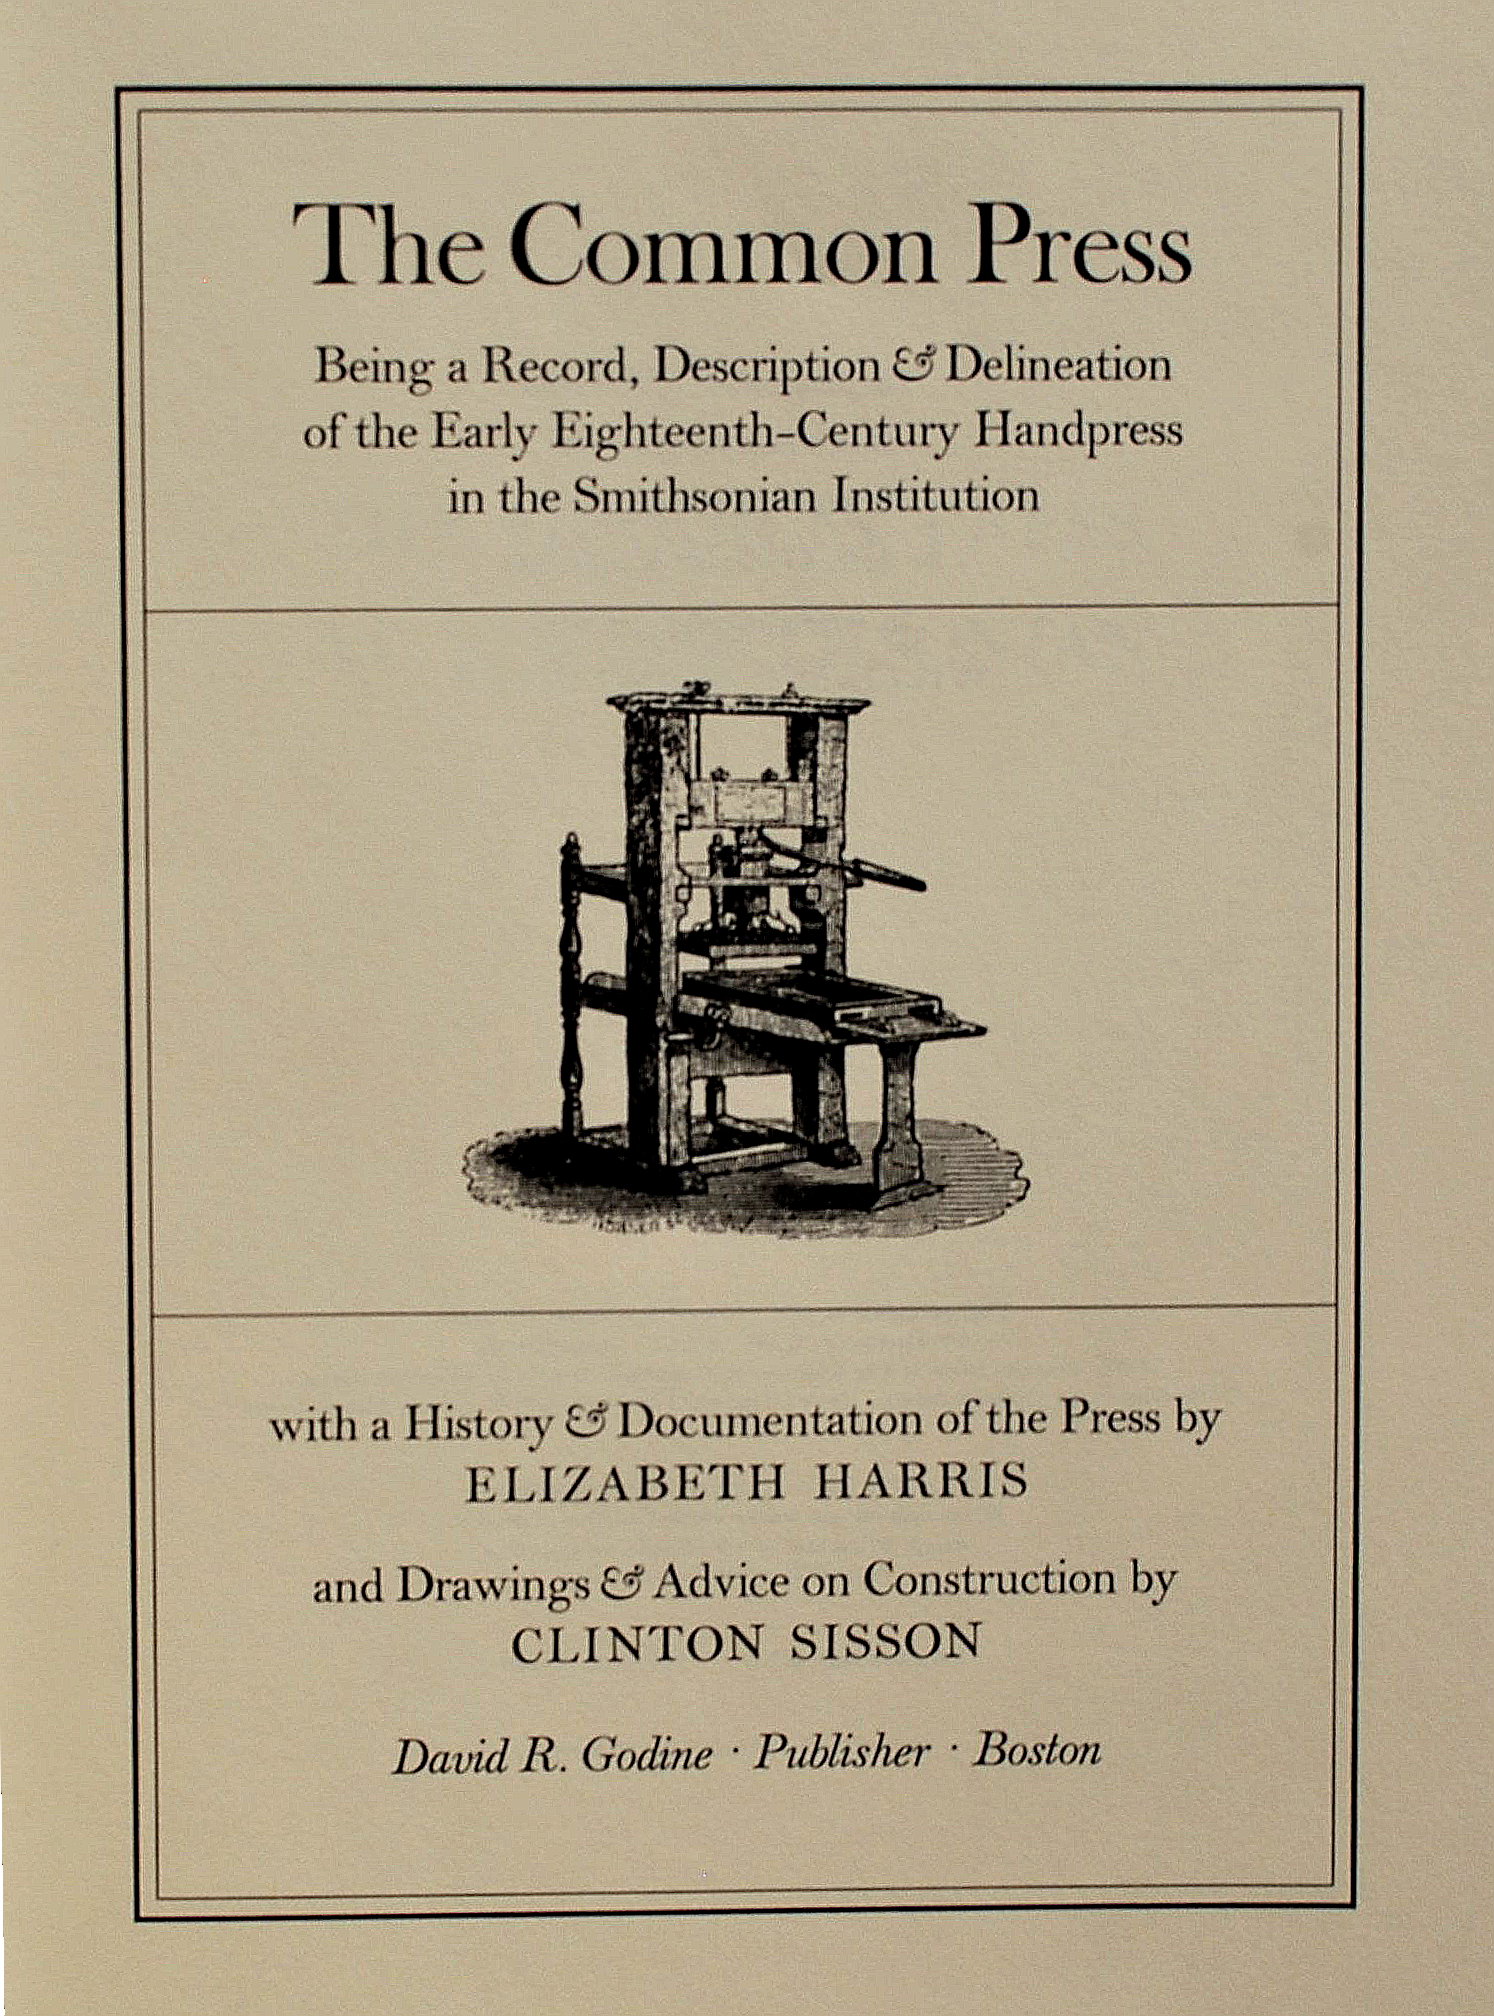 The Common Press by Elizabeth
                Harris & Clinton Sisson